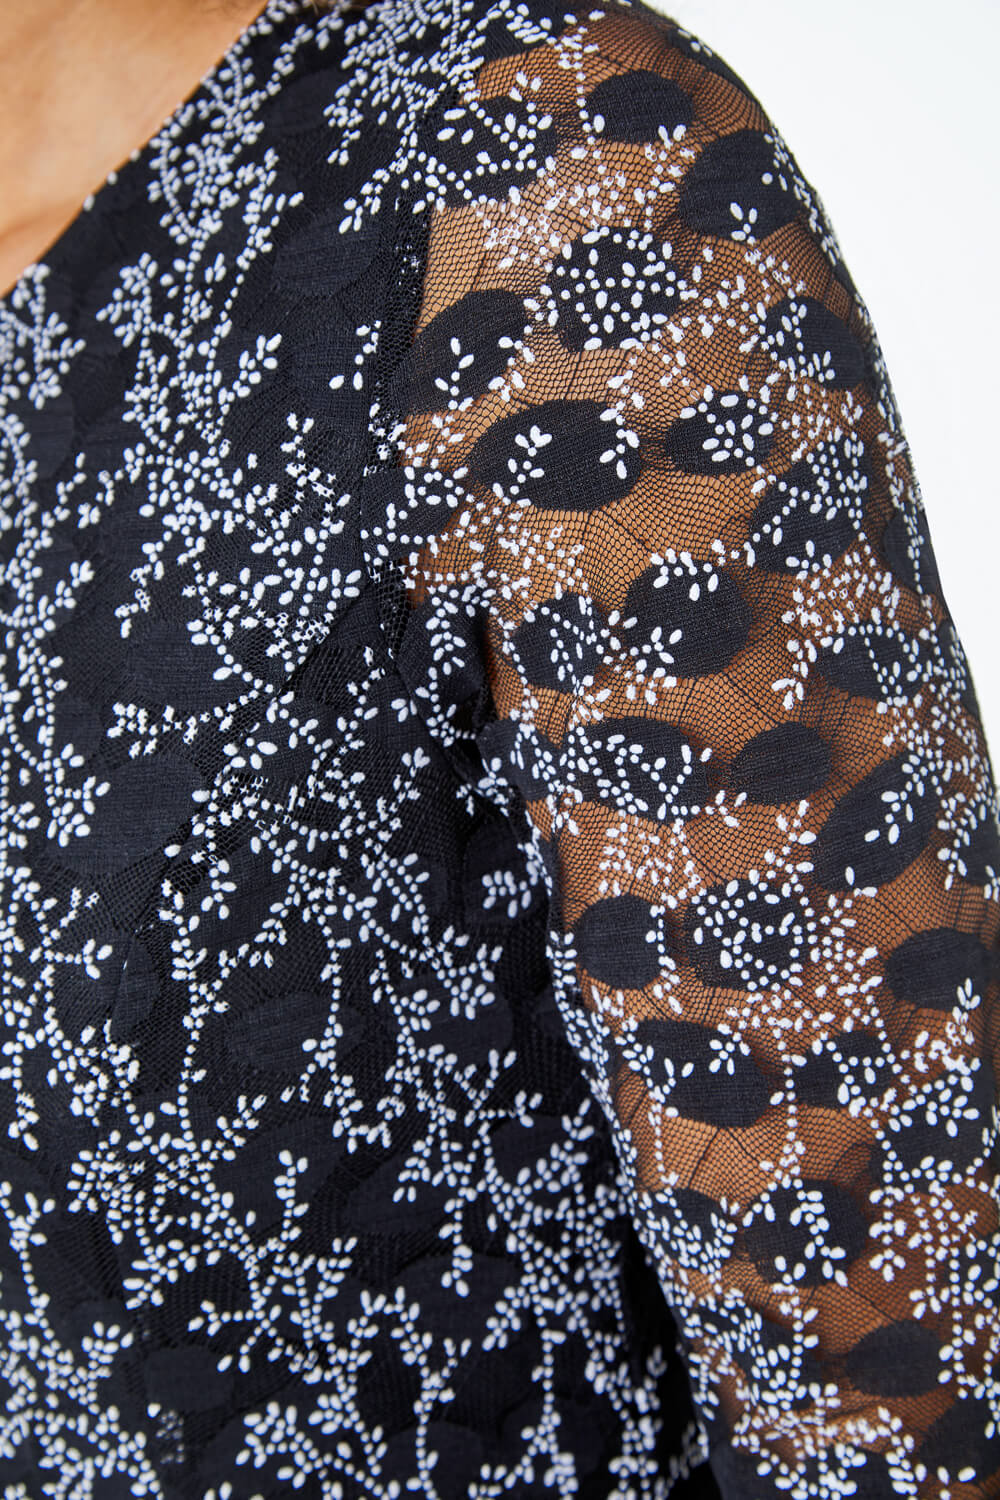 Black Petite Ditsy Floral Print Dress, Image 5 of 5